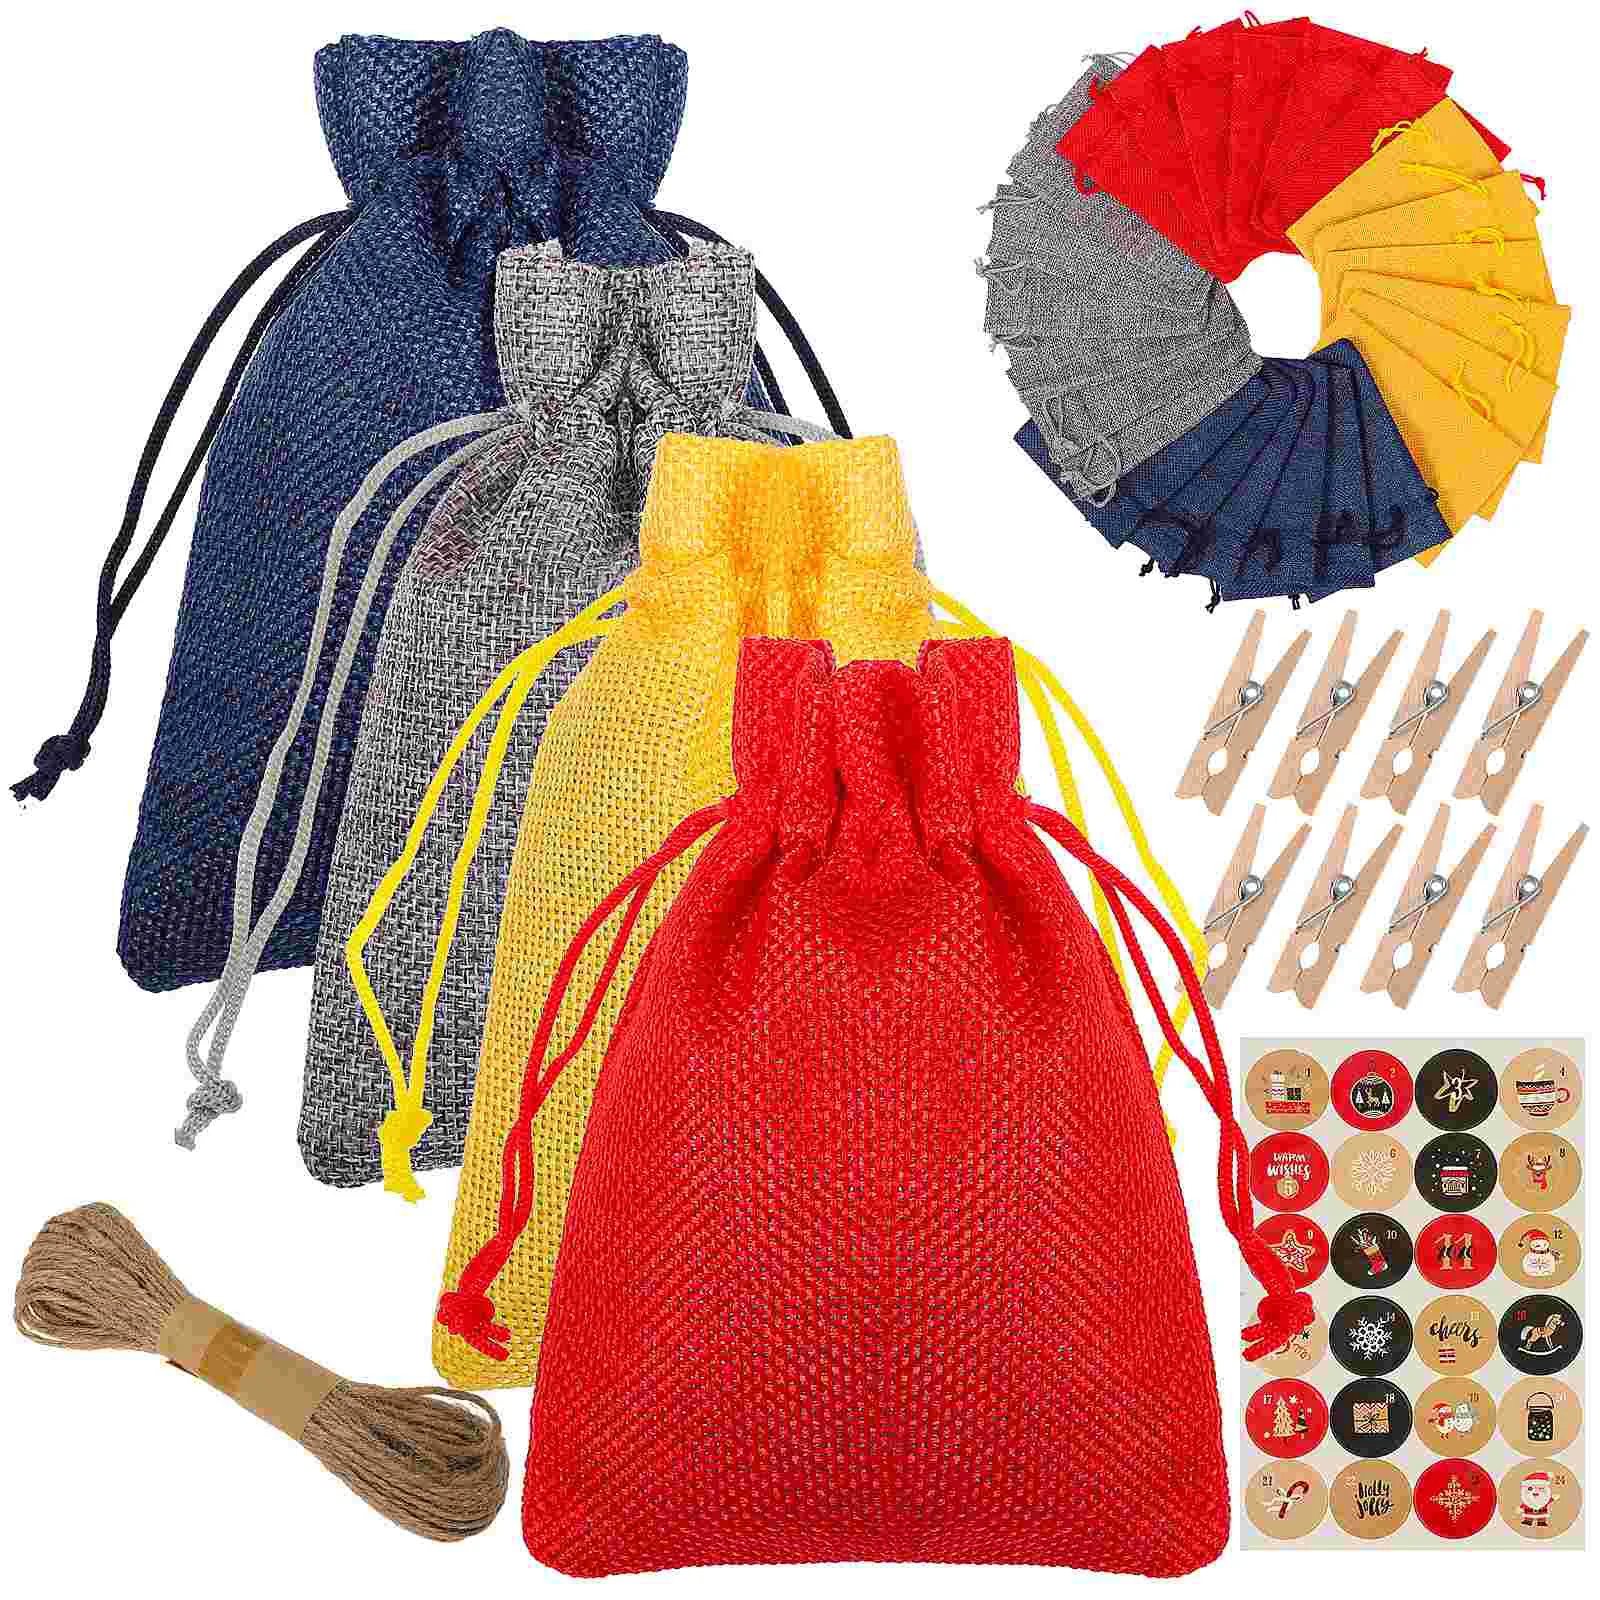 

24 Sets Small Burlap Bags Drawstring Gift Candy Treat Bags Reusable Xmas Gift Bags